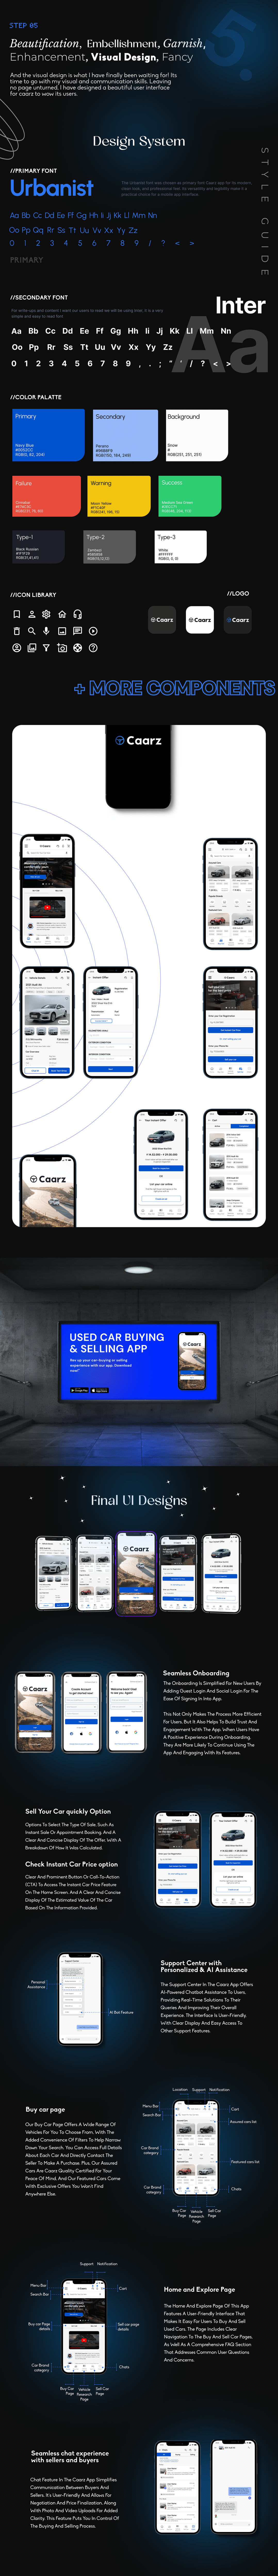 Case Study Mobile app UI UX Case study usability testing user interface UX design visual design app car